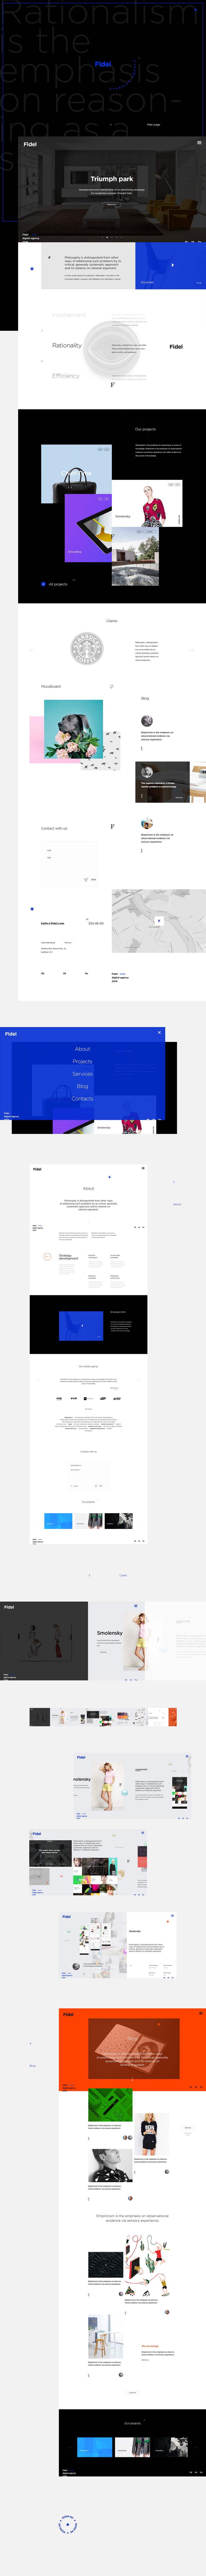 creative agency site Web design Webdesign portfolio grid UI